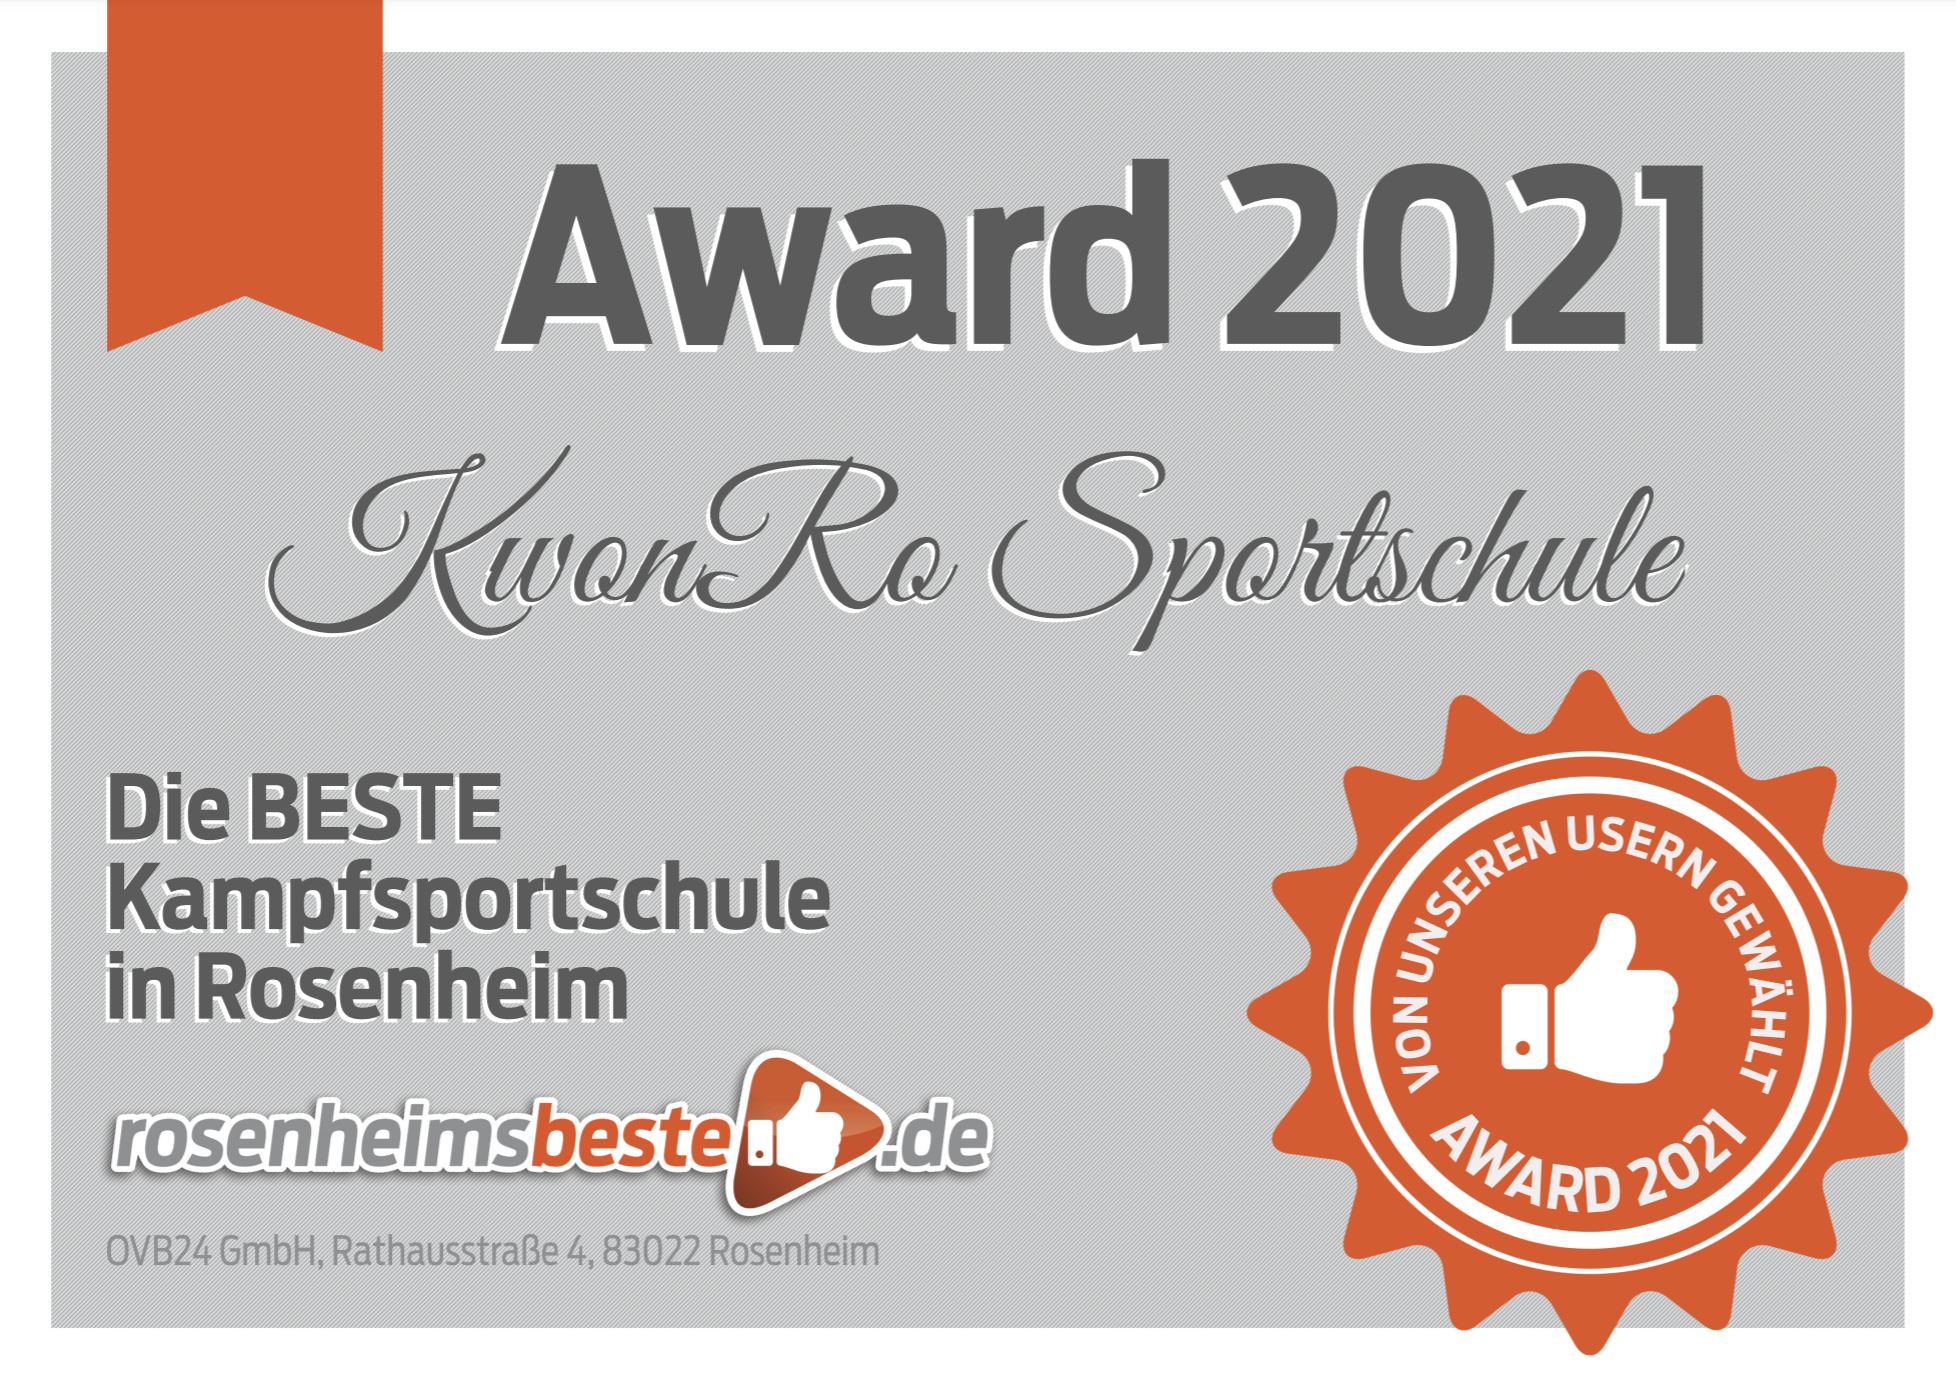 Beste Kampfsportschule Award 2021